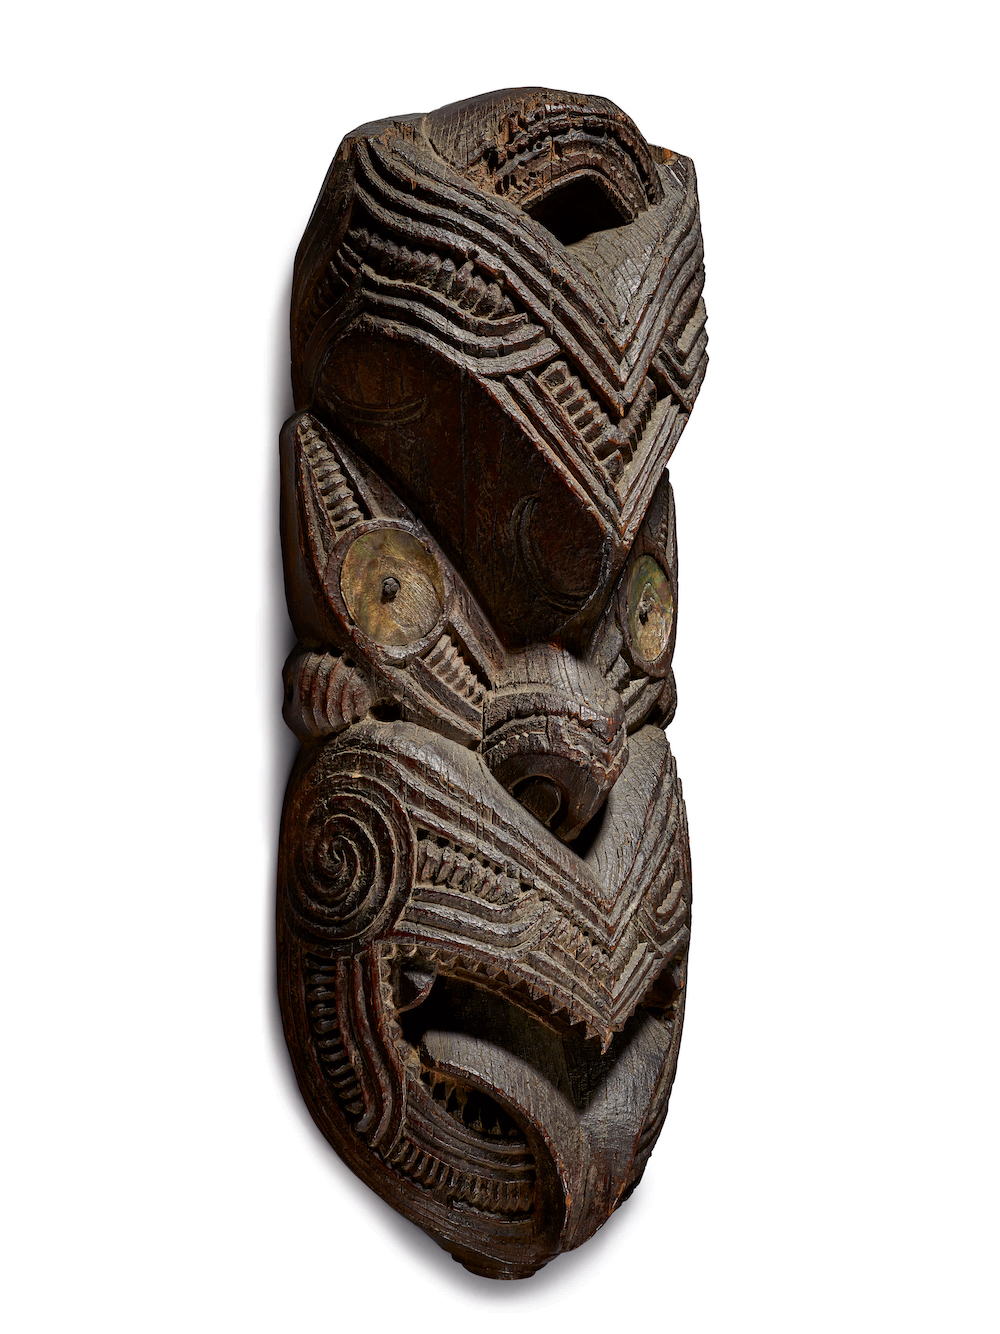 Panneau maori, nouvelle-zélande, sothebys